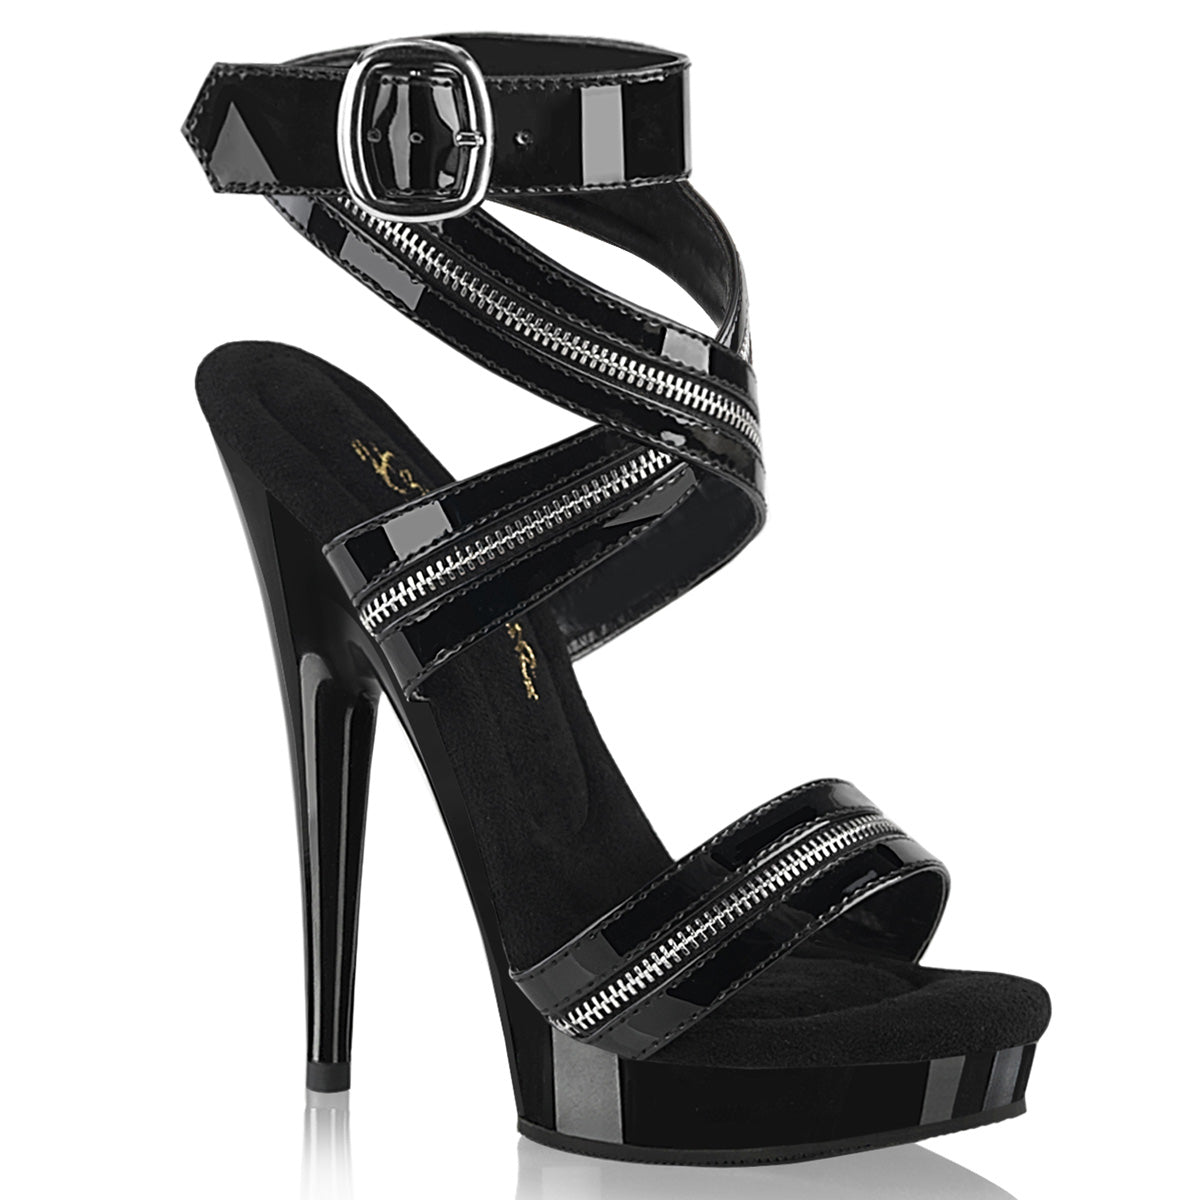 6" Heel, 1" Platform Black Patent Color Zipper-Inlaid Wrap-Around Sandal